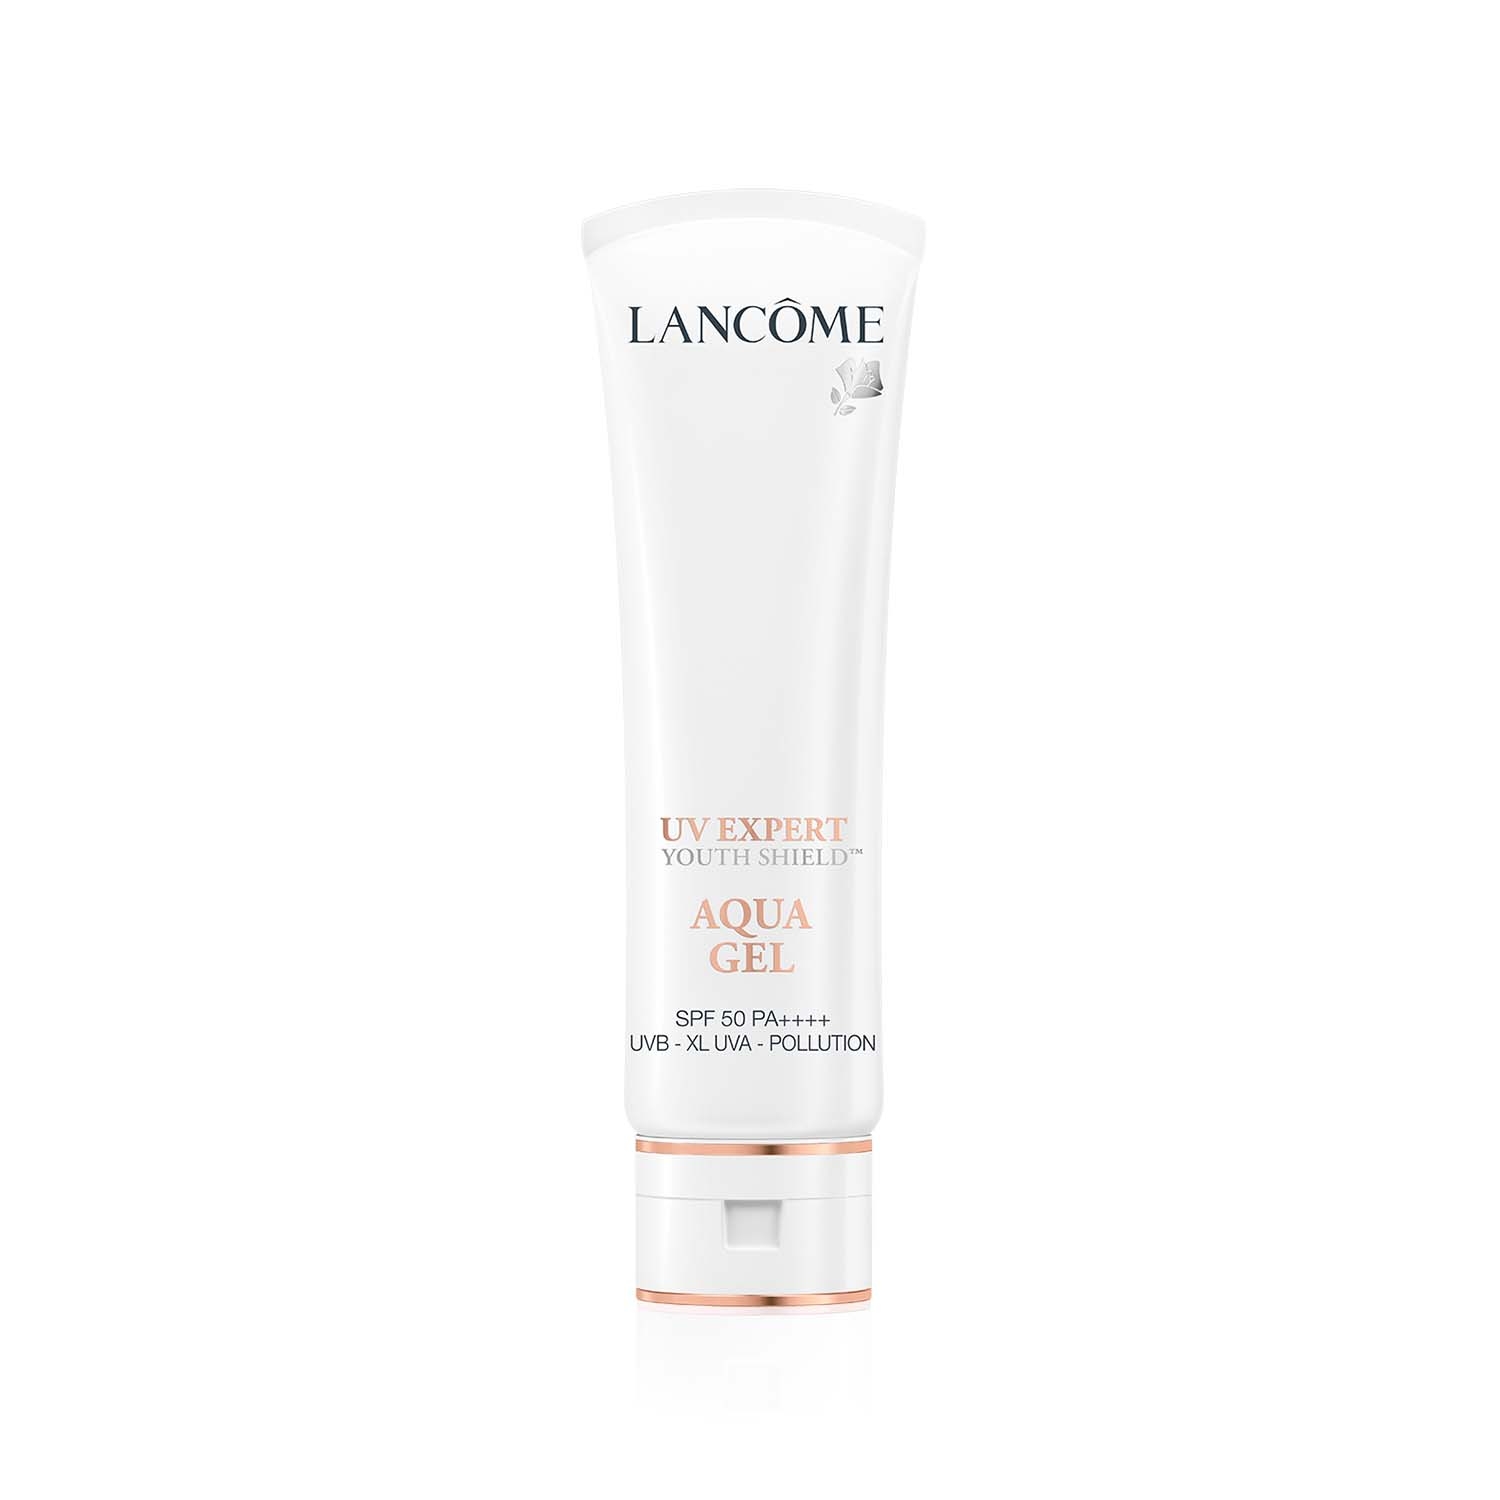 Lancome | Lancome UV Expert Aqua Gel SPF 50 PA++ (50ml)